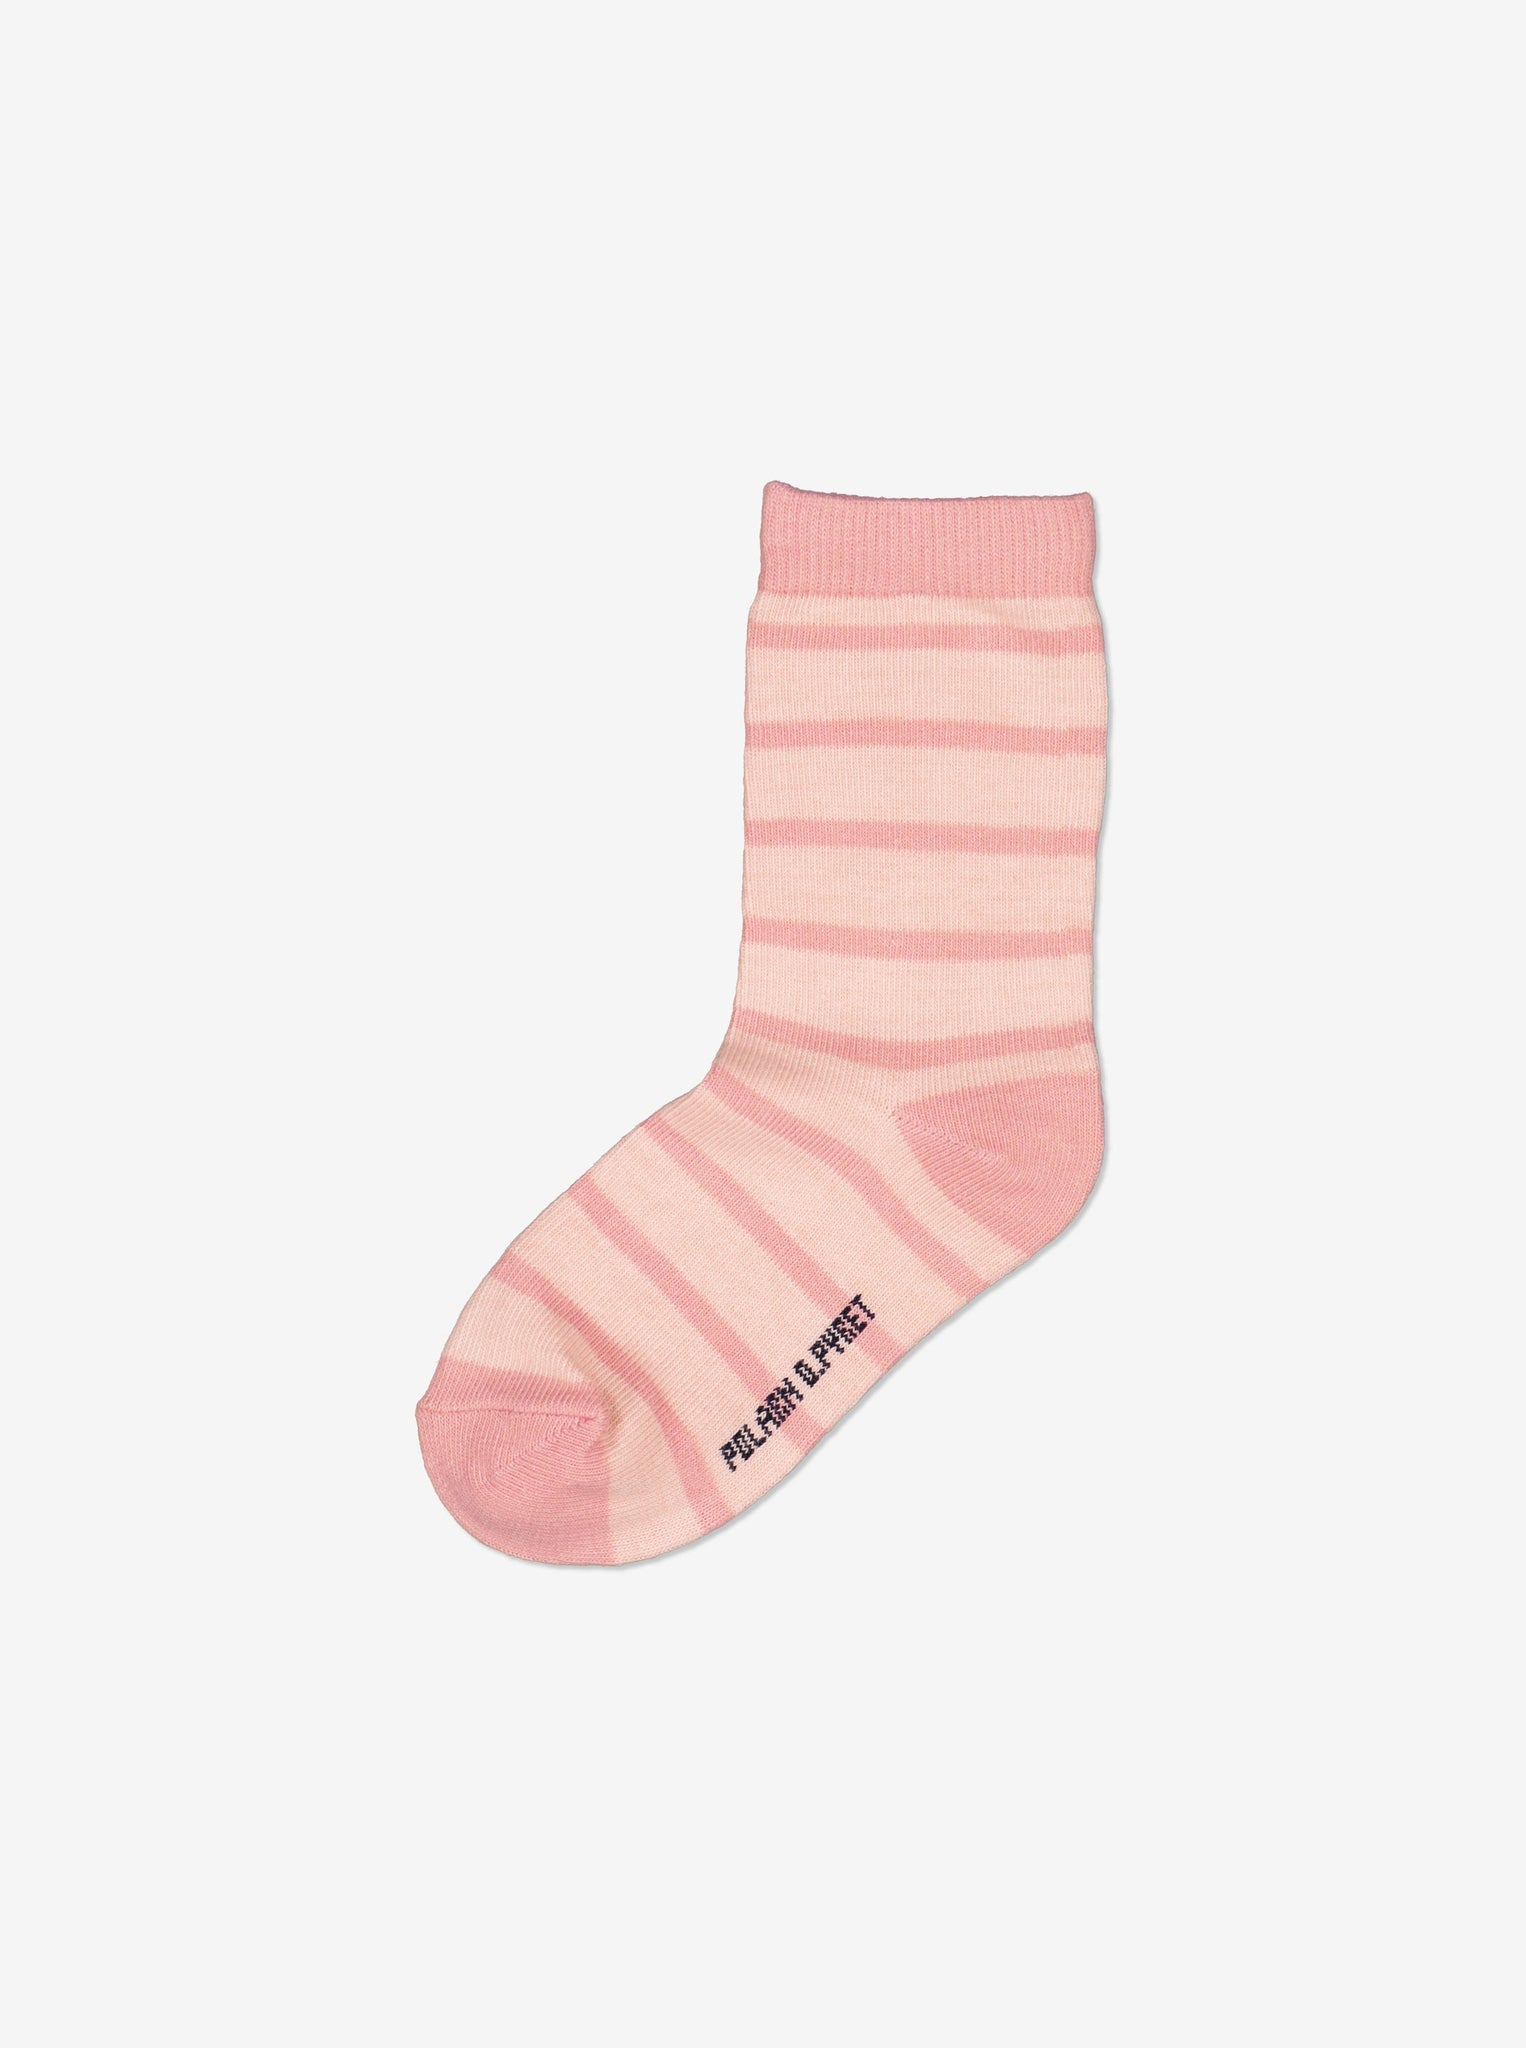  Pink Kids Socks Multipack from Polarn O. Pyret Kidswear. Made using environmentally friendly materials.